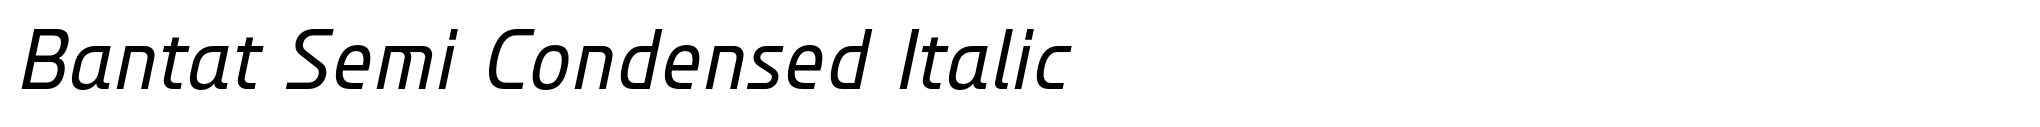 Bantat Semi Condensed Italic image